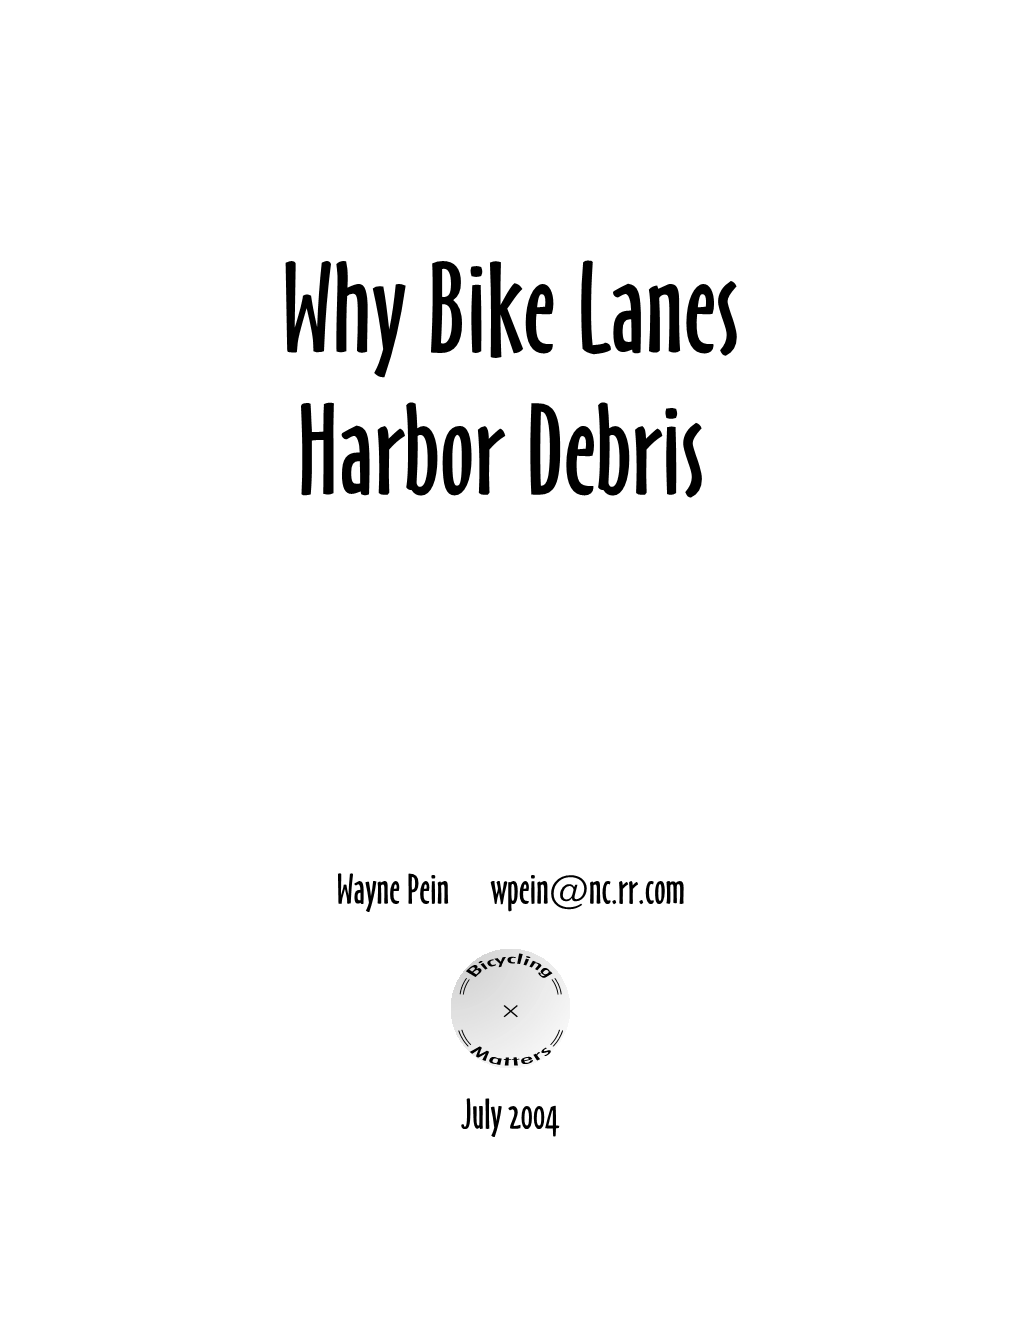 Why Bike Lanes Harbor Debris